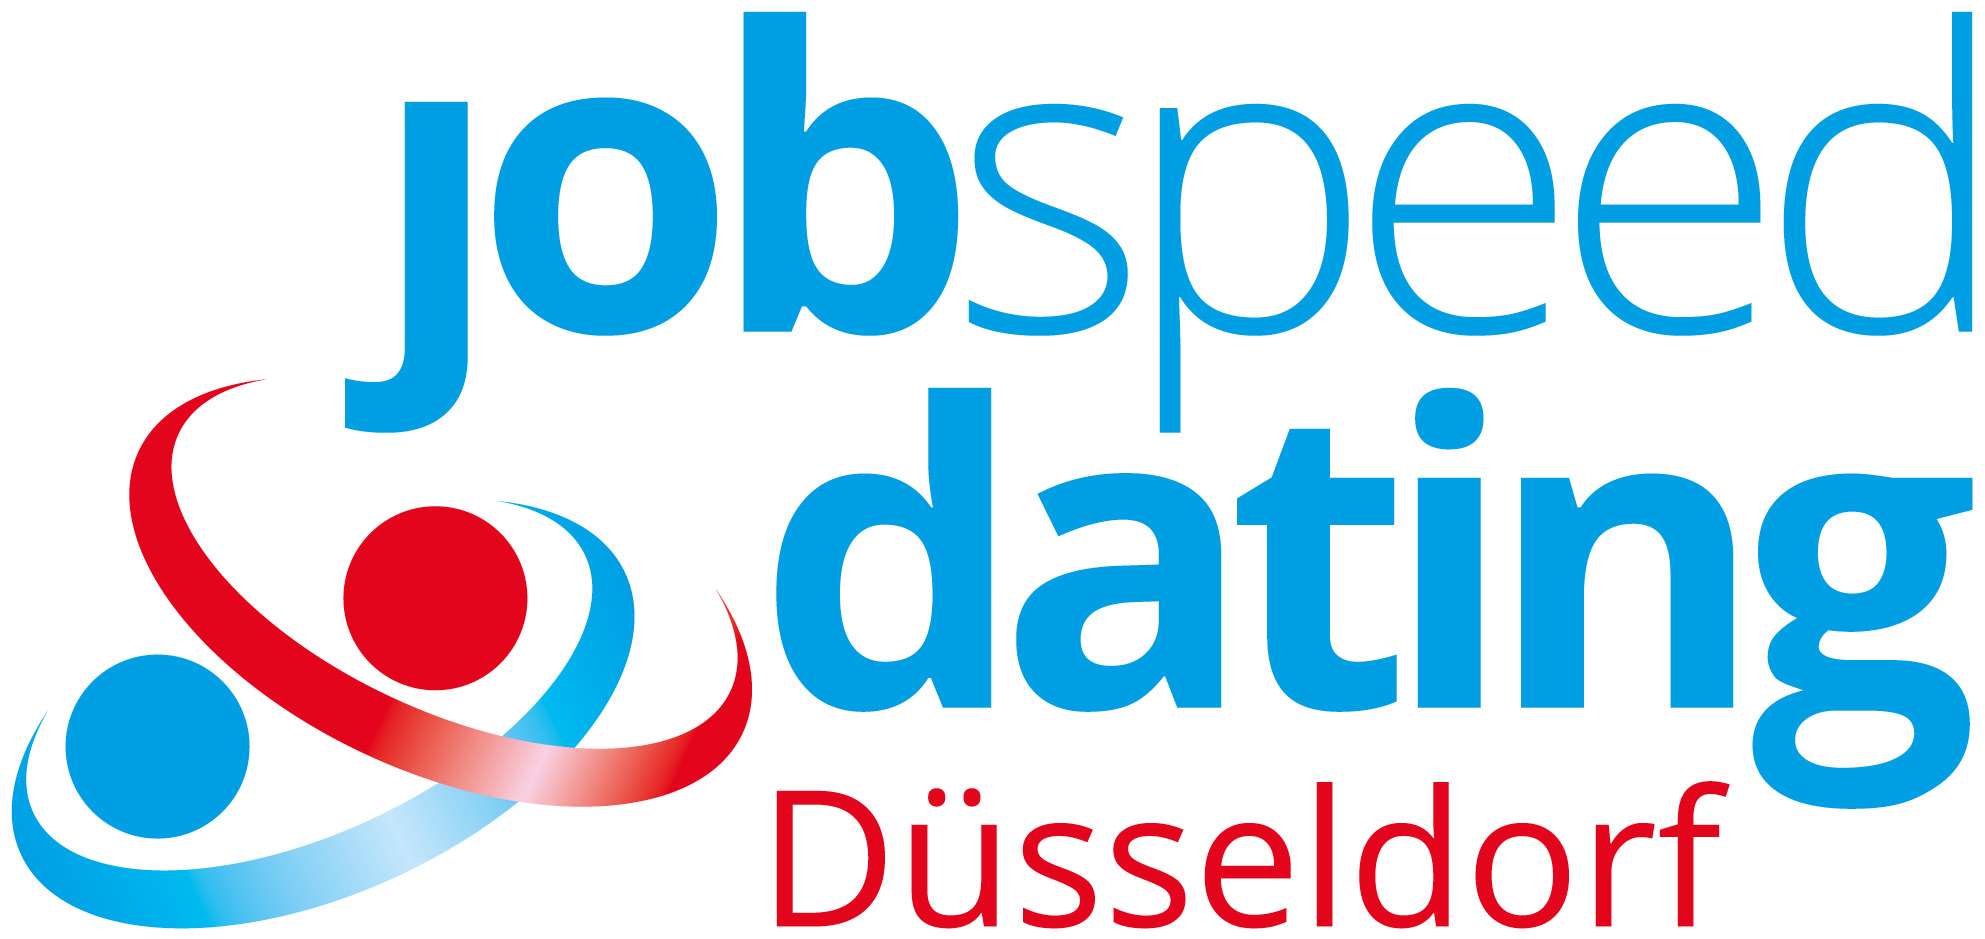 jsd-ddorf2019-logo-rz-2406-rgb.jpg